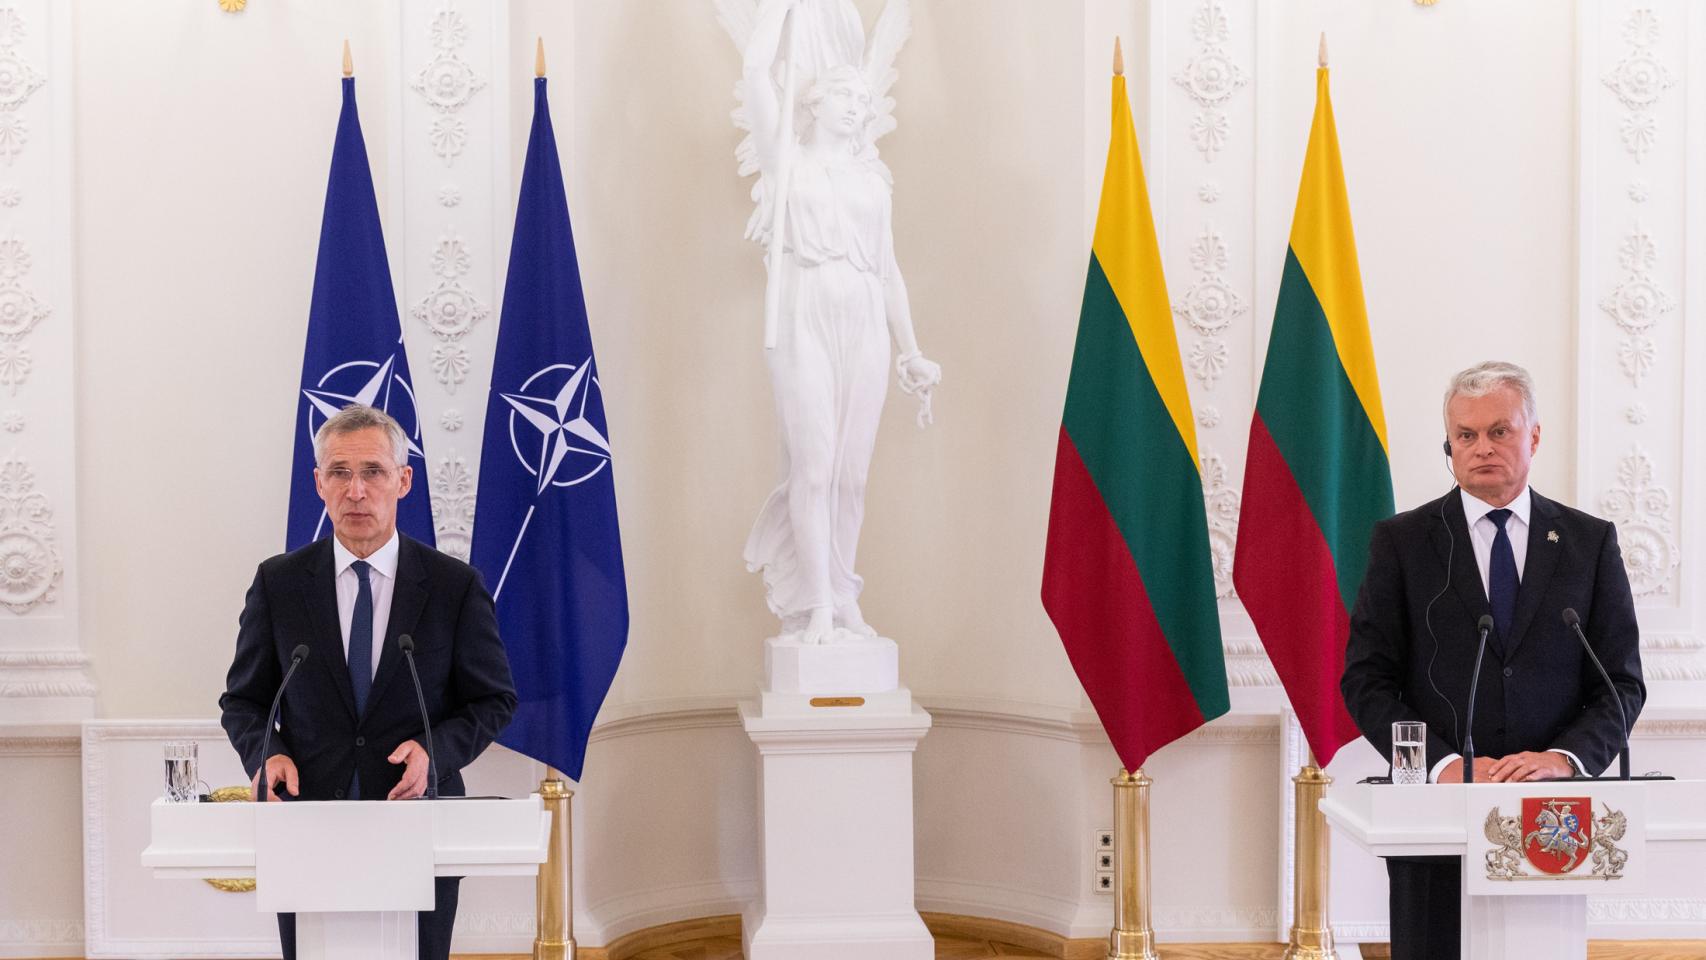 El secretario general de la OTAN, Jens Stoltenberg, durante su comparecencia este lunes junto al presidente de Lituania, Gitanas Nauseda